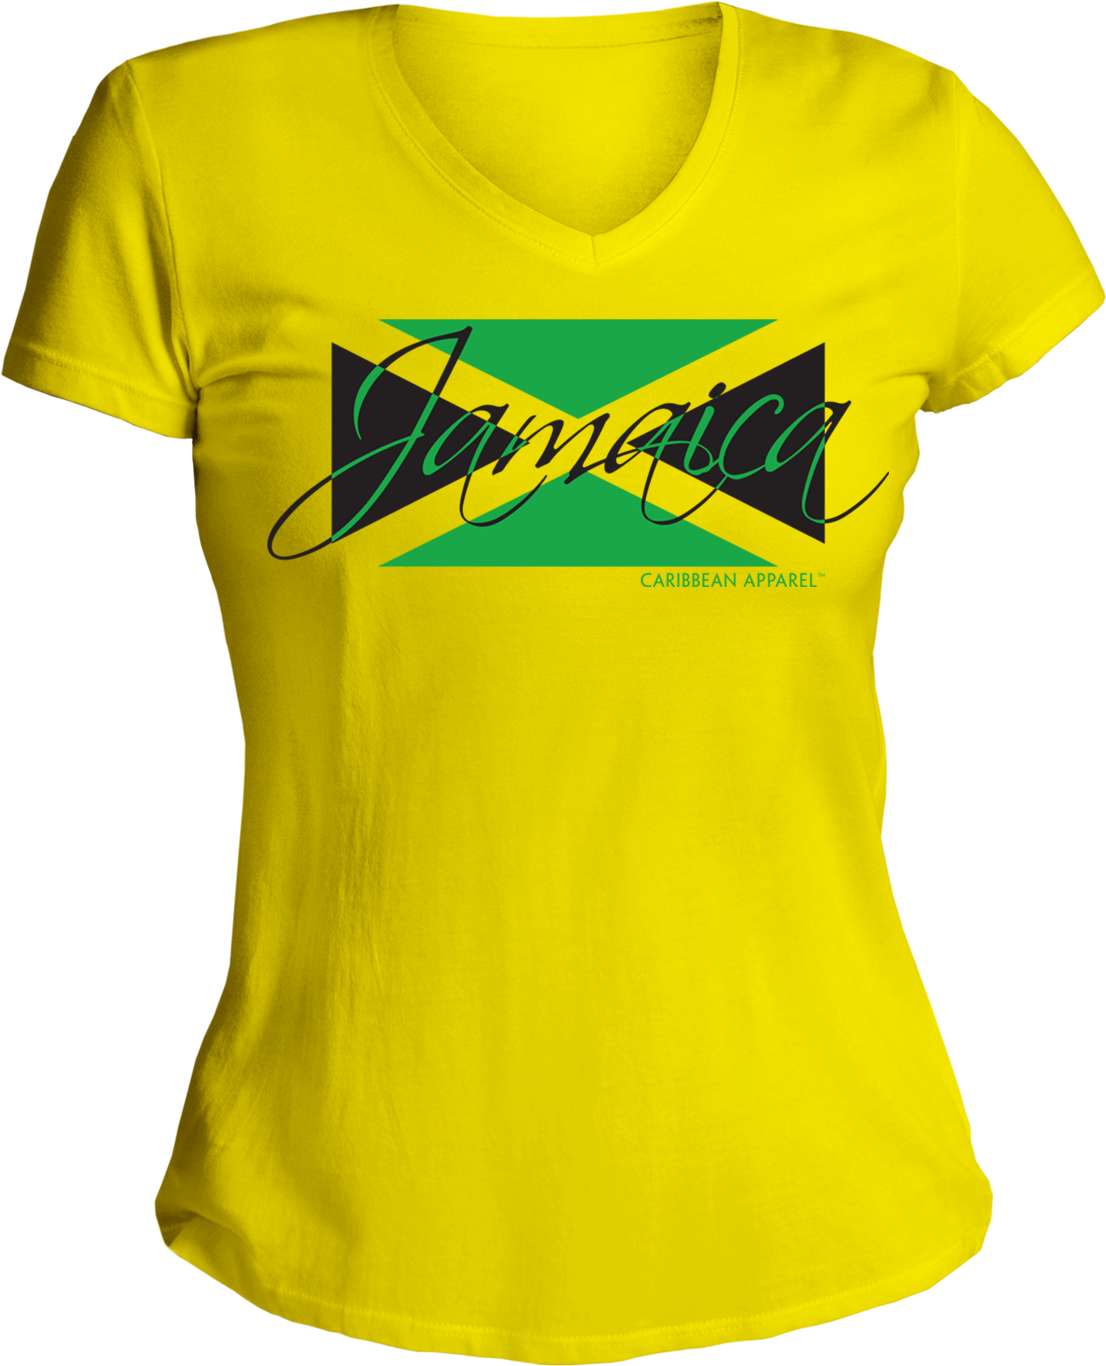 Jamaica Caribbean Apparel Yellow Tshirt